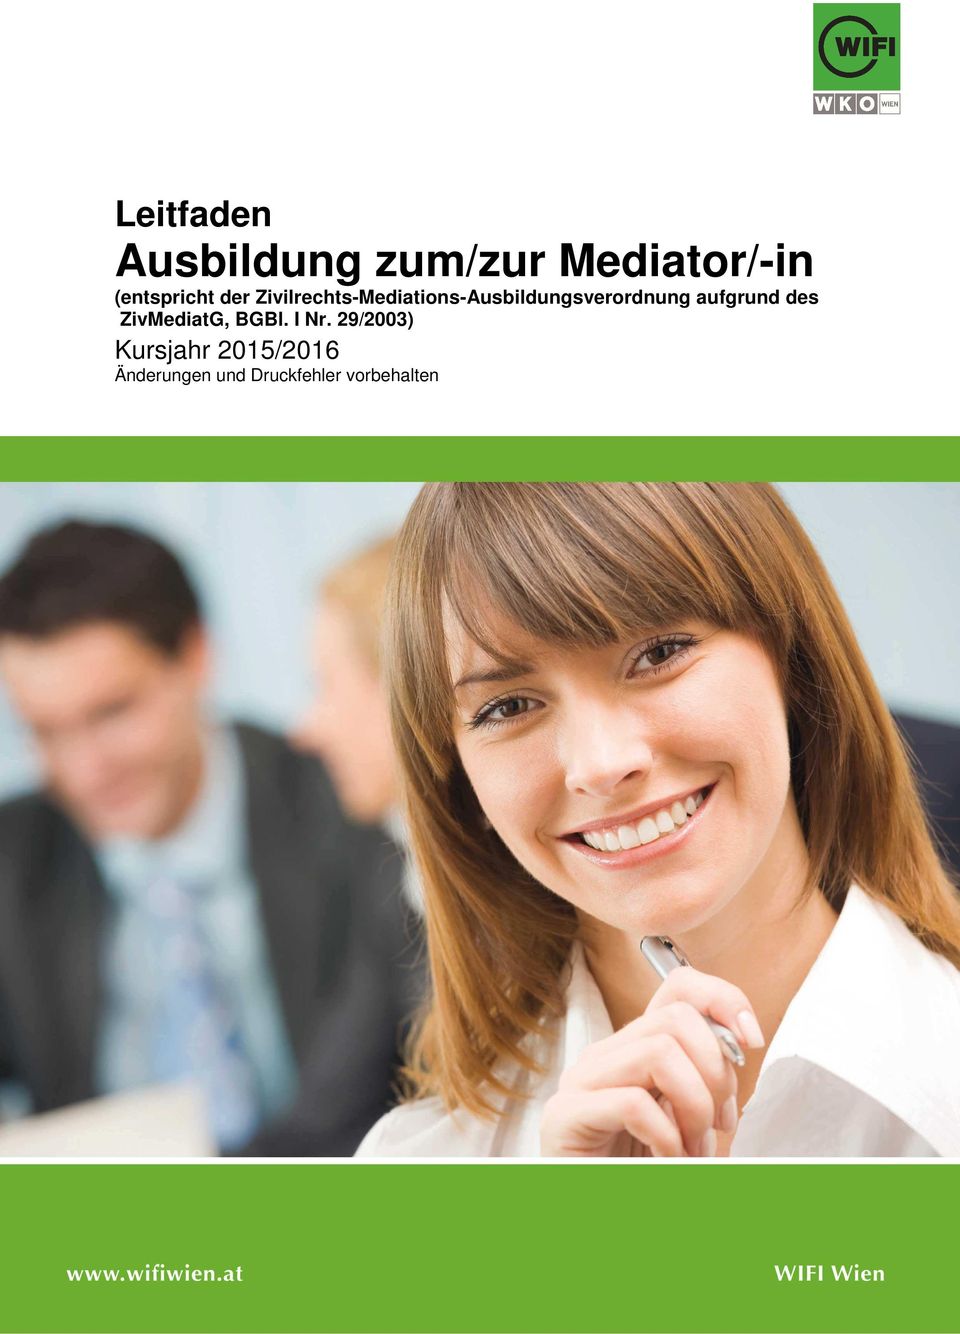 Zivilrechts-Mediations-Ausbildungsverordnung